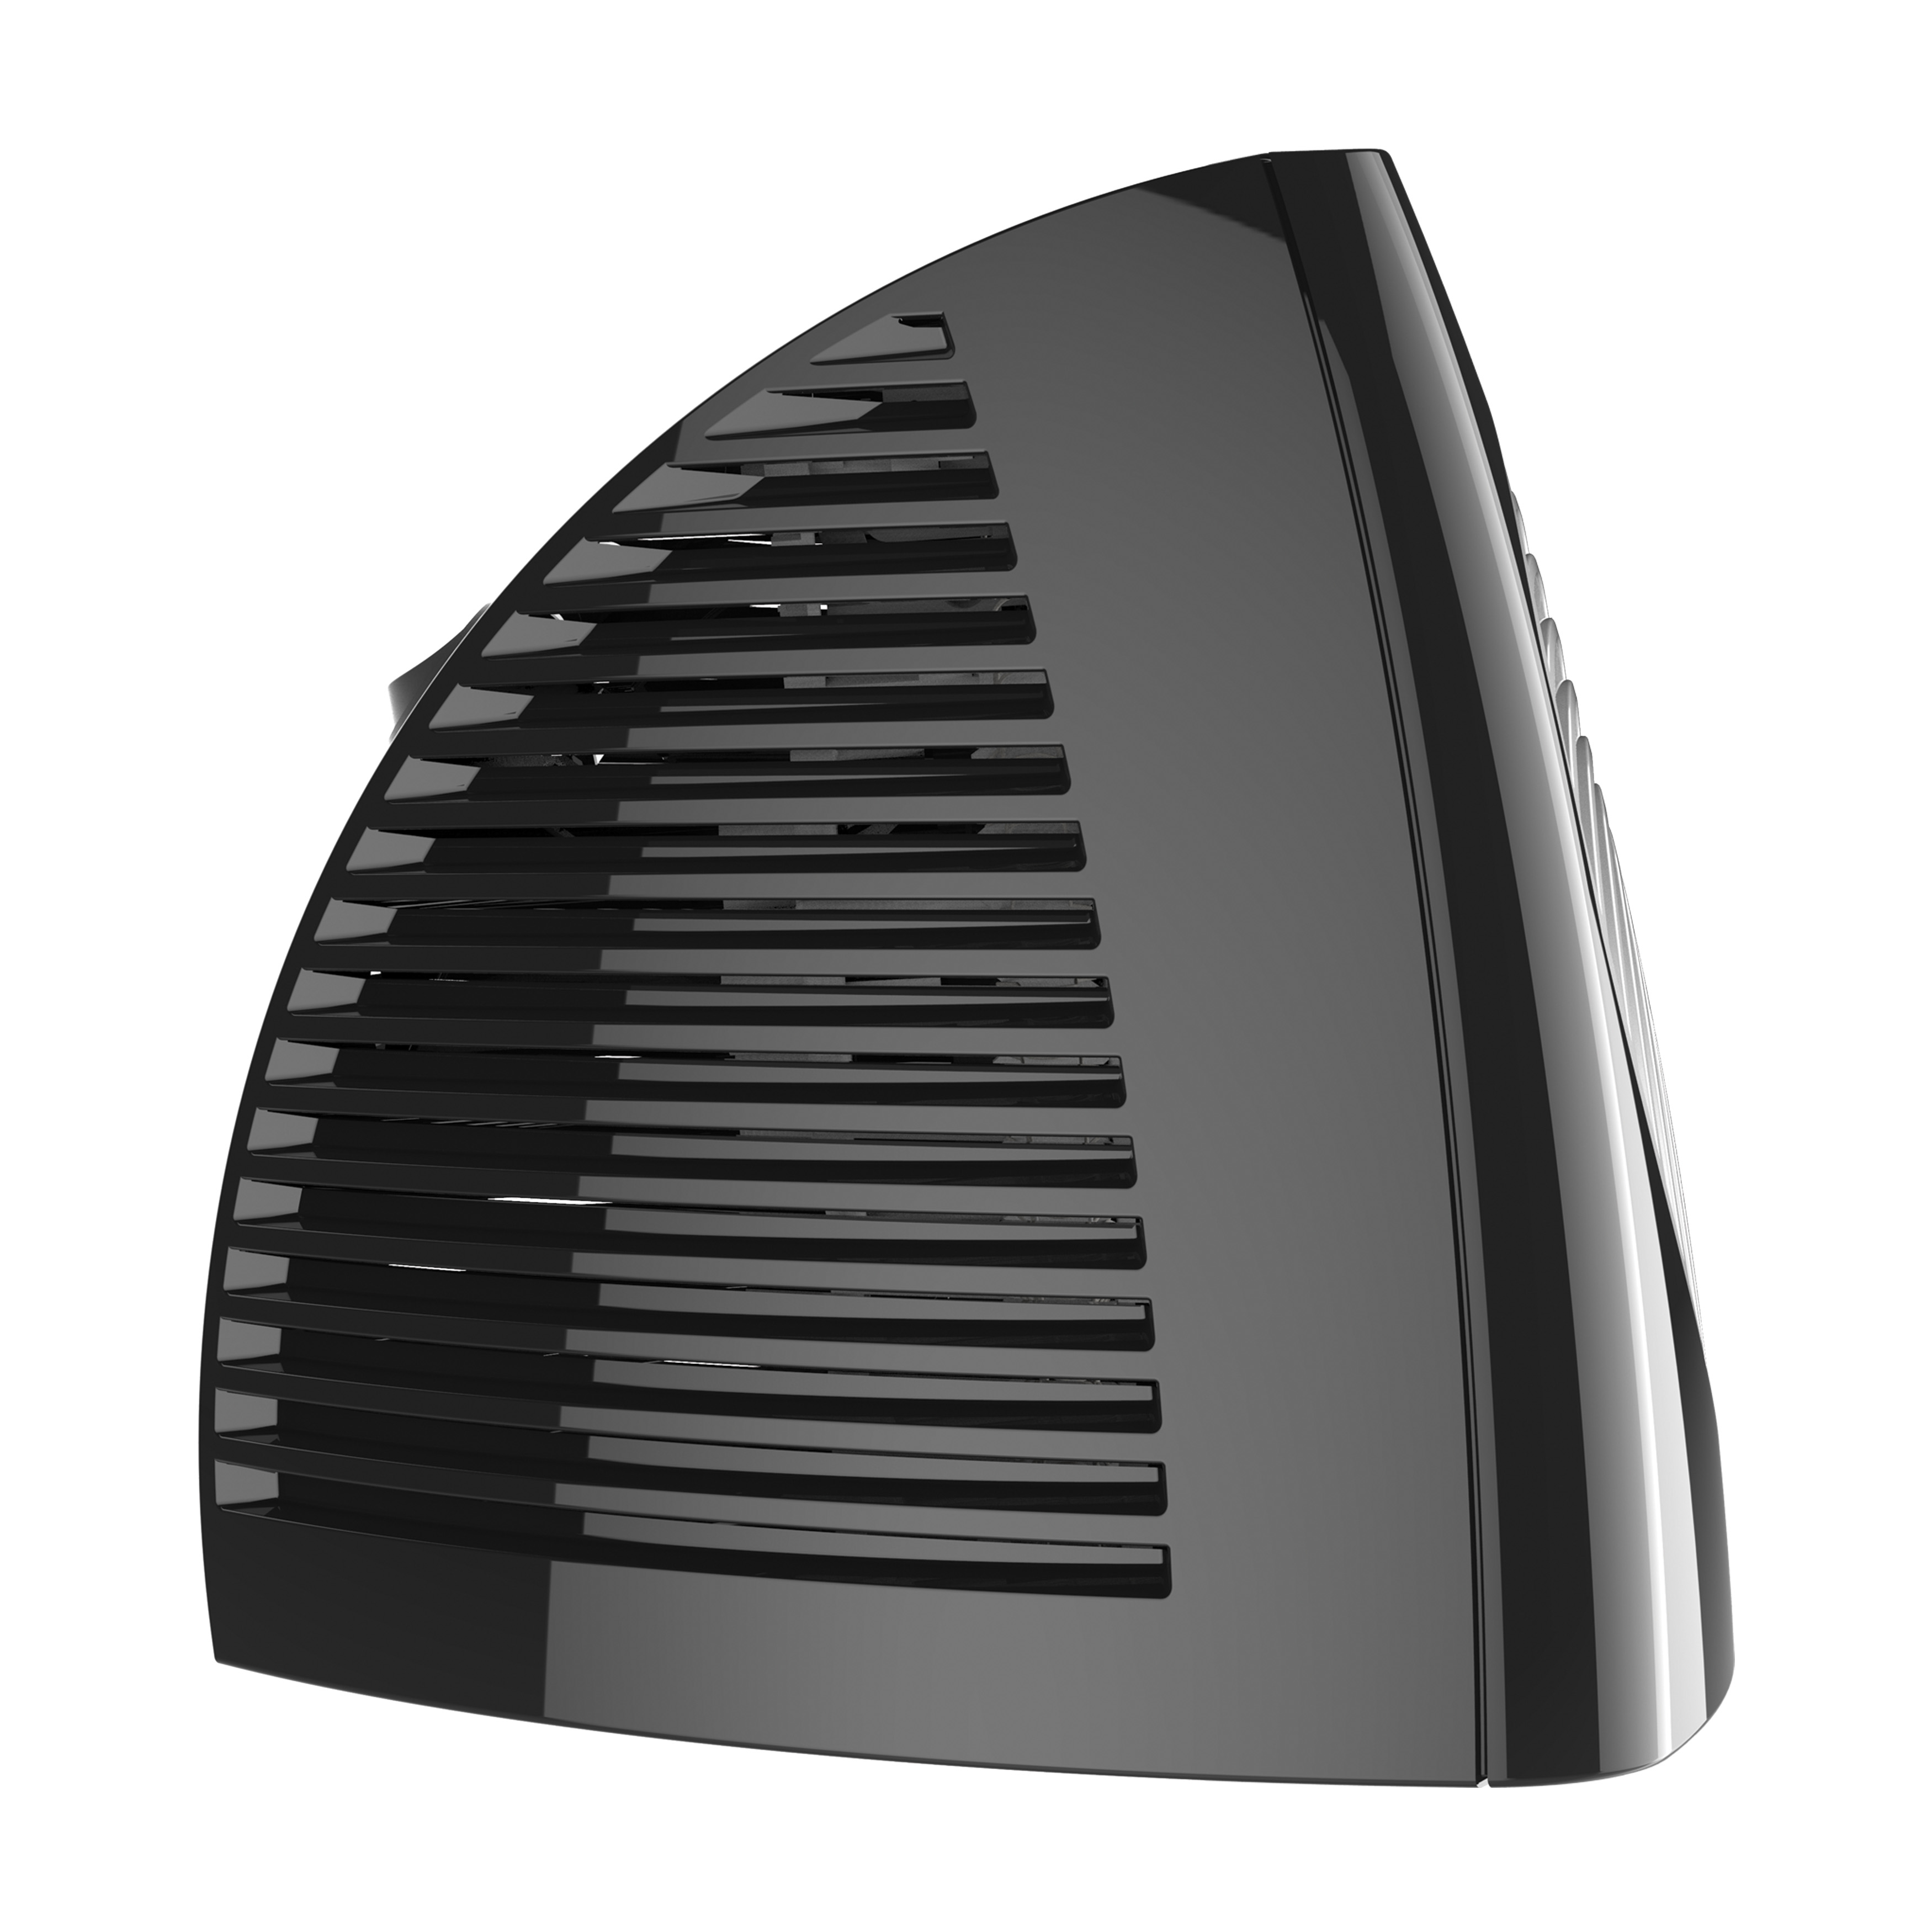 Vornado VH202 Personal Space Heater with Vortex Heat, Black (New) - image 3 of 5